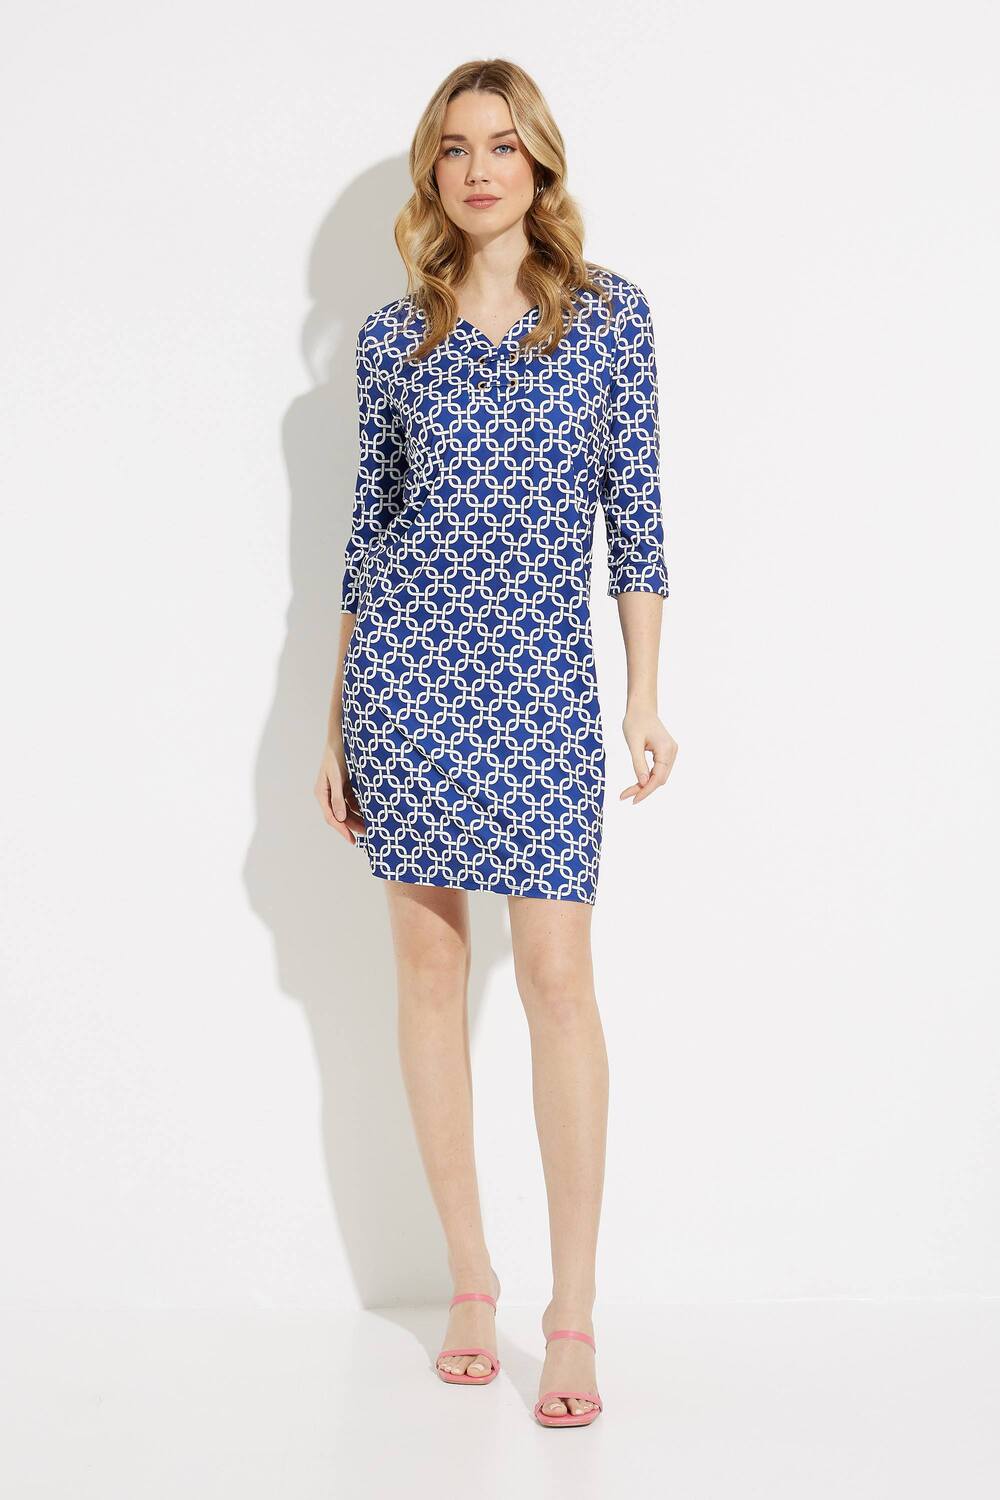 Retro Print Dress Style P23109 (blue/white)